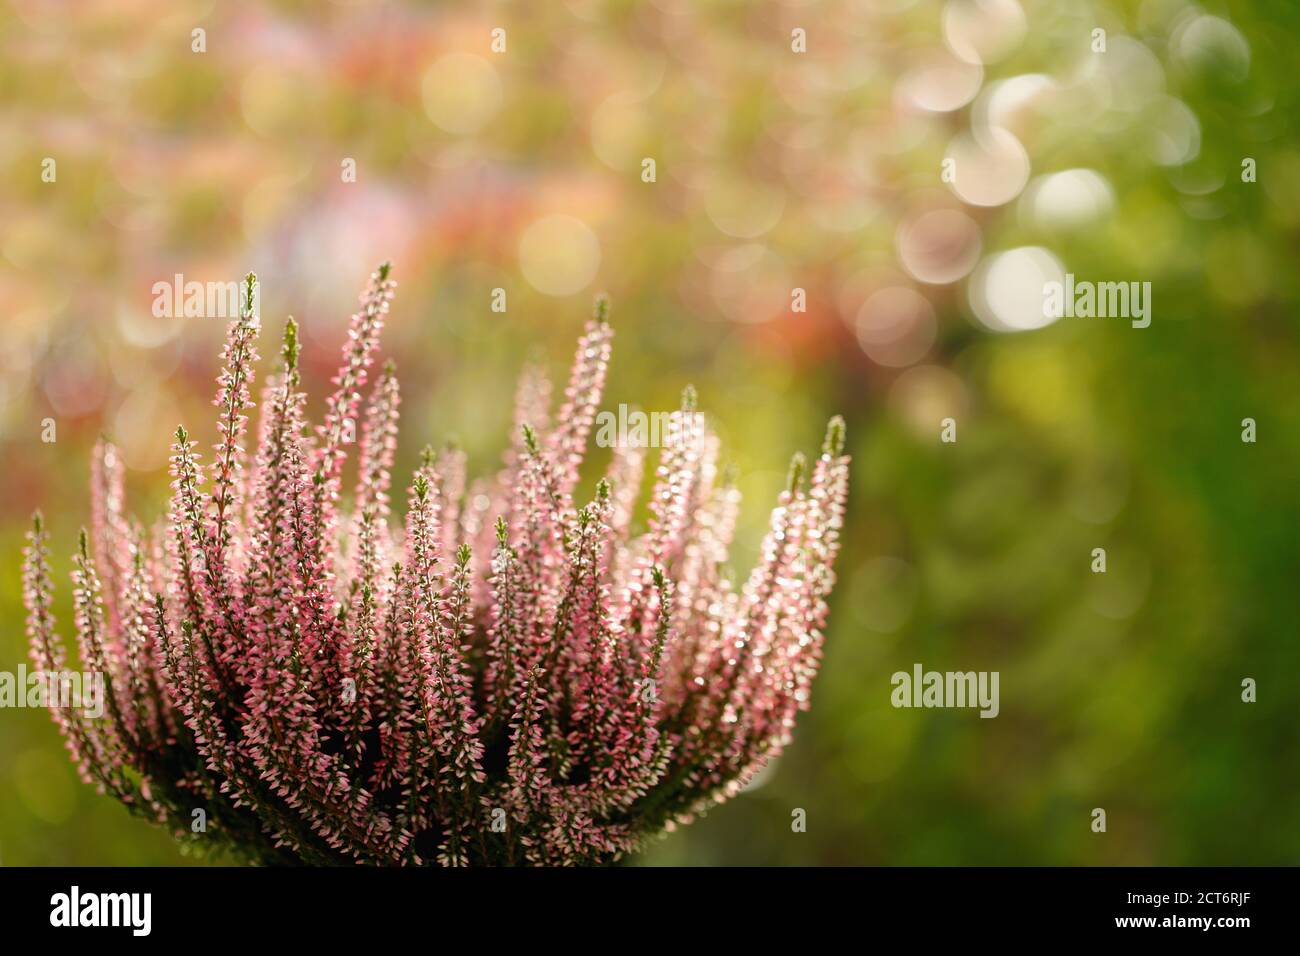 Erica cinerea (calluna vulgaris) with blurred background Stock Photo